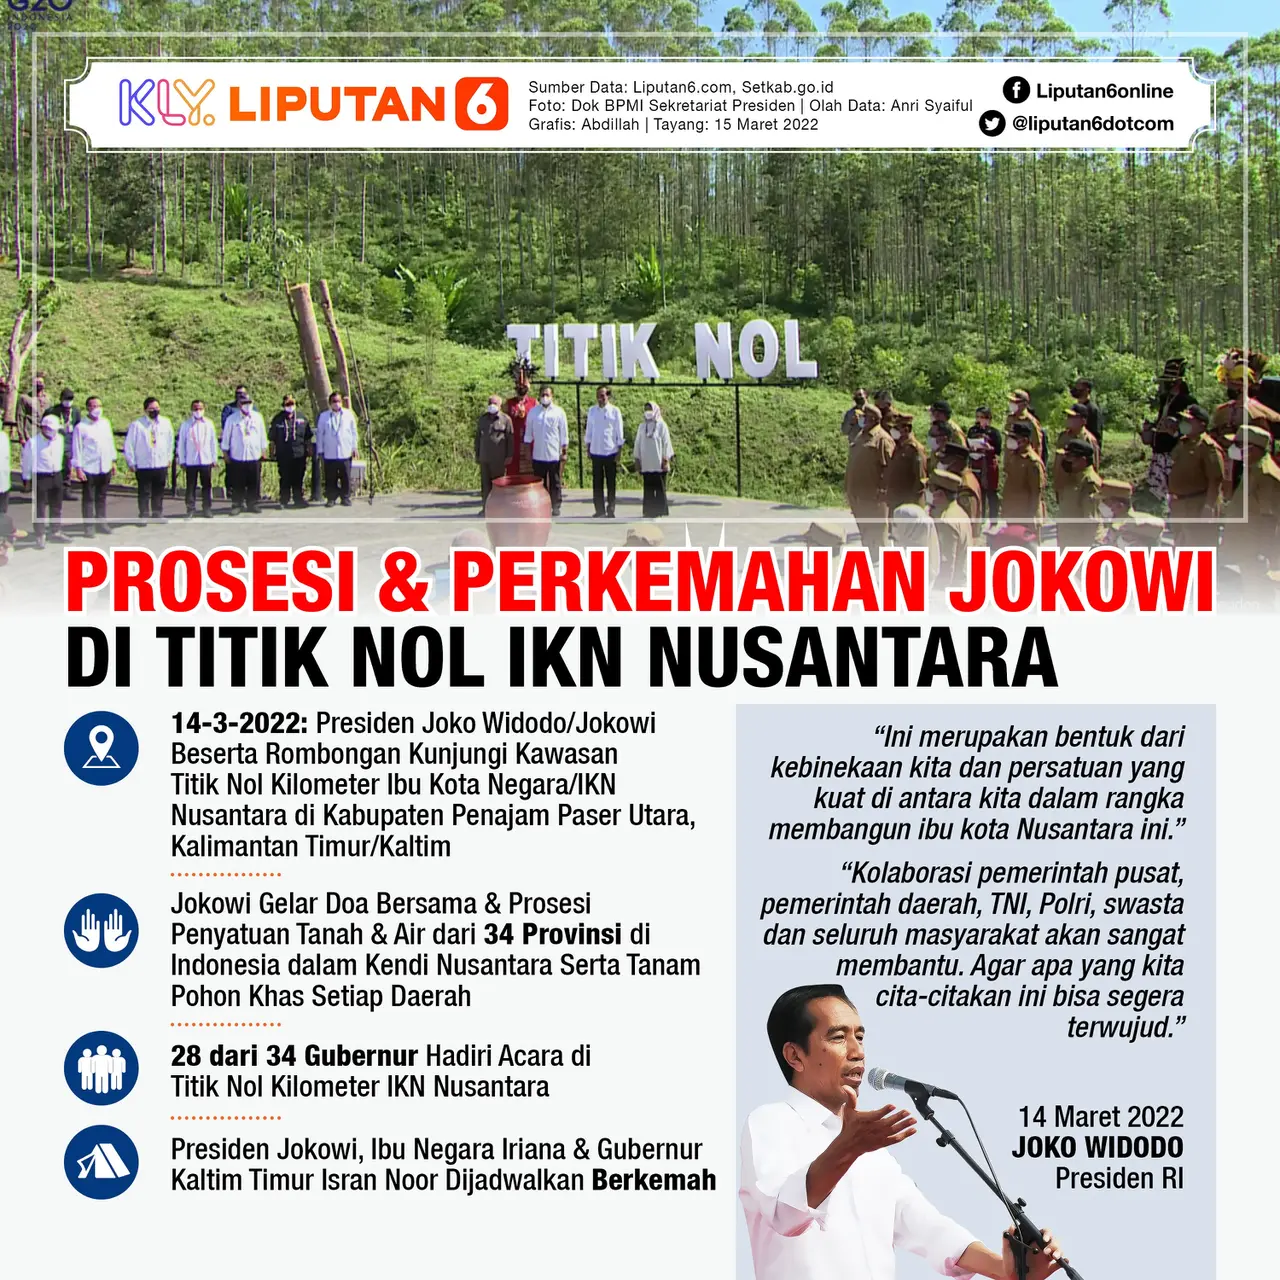 091047800_1647256030-Infografis_SQ_Prosesi_dan_Perkemahan_Jokowi_di_Titik_Nol_IKN_Nusantara.jpg